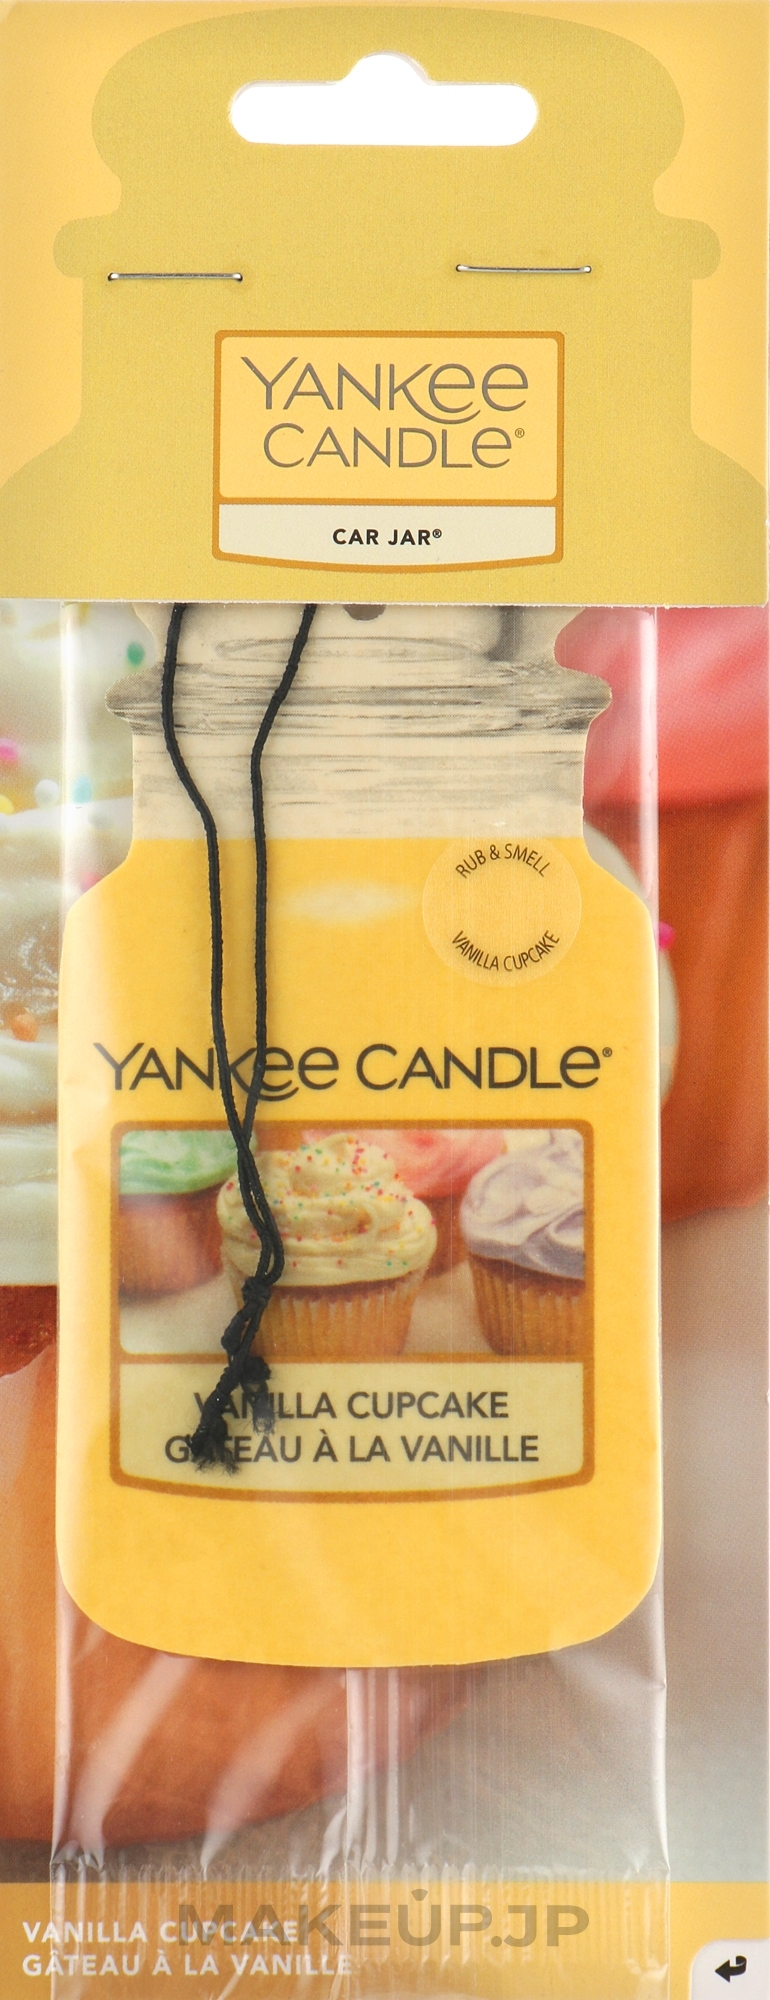 Dry Air Freshener "Vanilla Cupcake" - Yankee Candle Vanilla Cupcake Car Jar Ultimate — photo 1 szt.